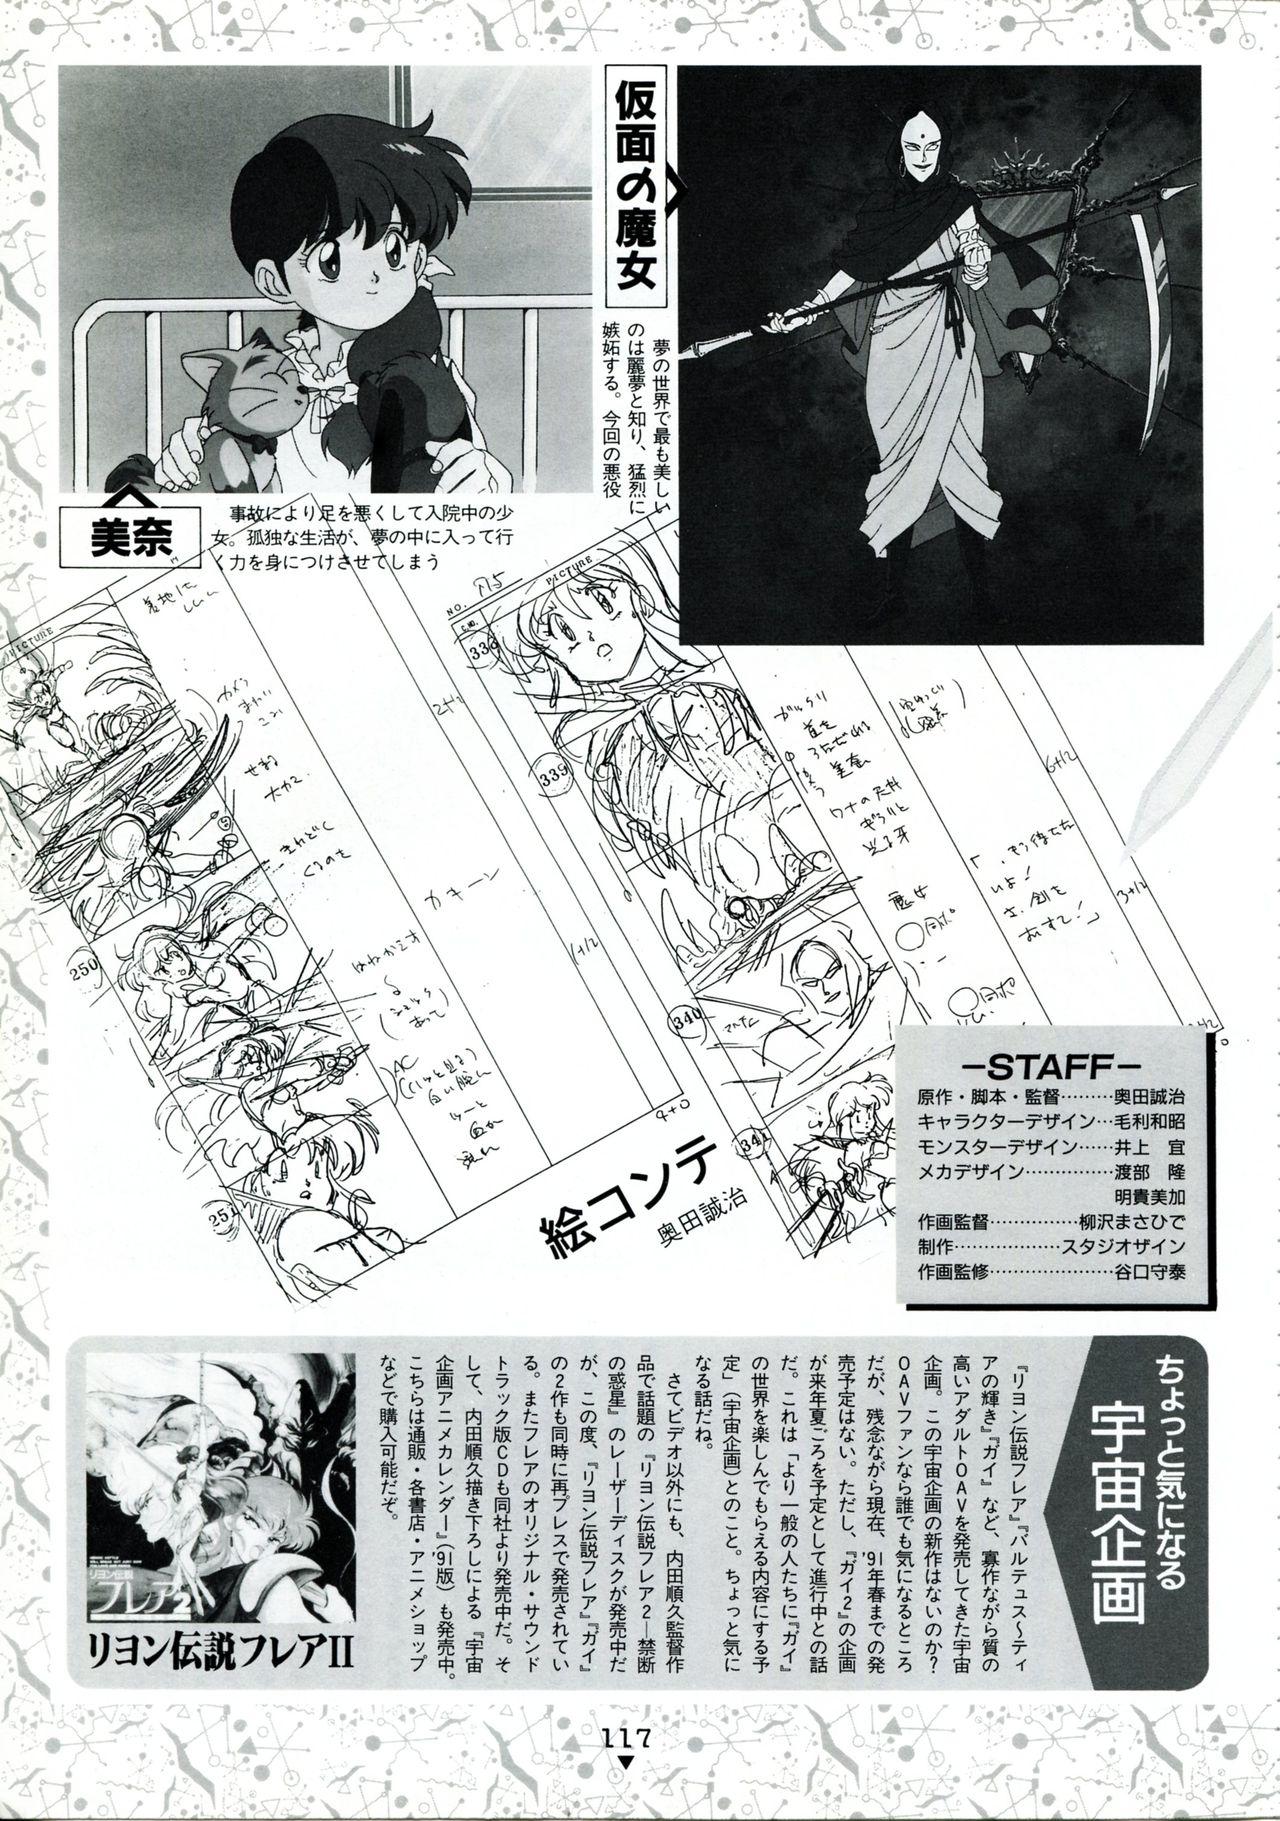 Bishoujo Anime Daizenshuu - Adult Animation Video Catalog 1991 112